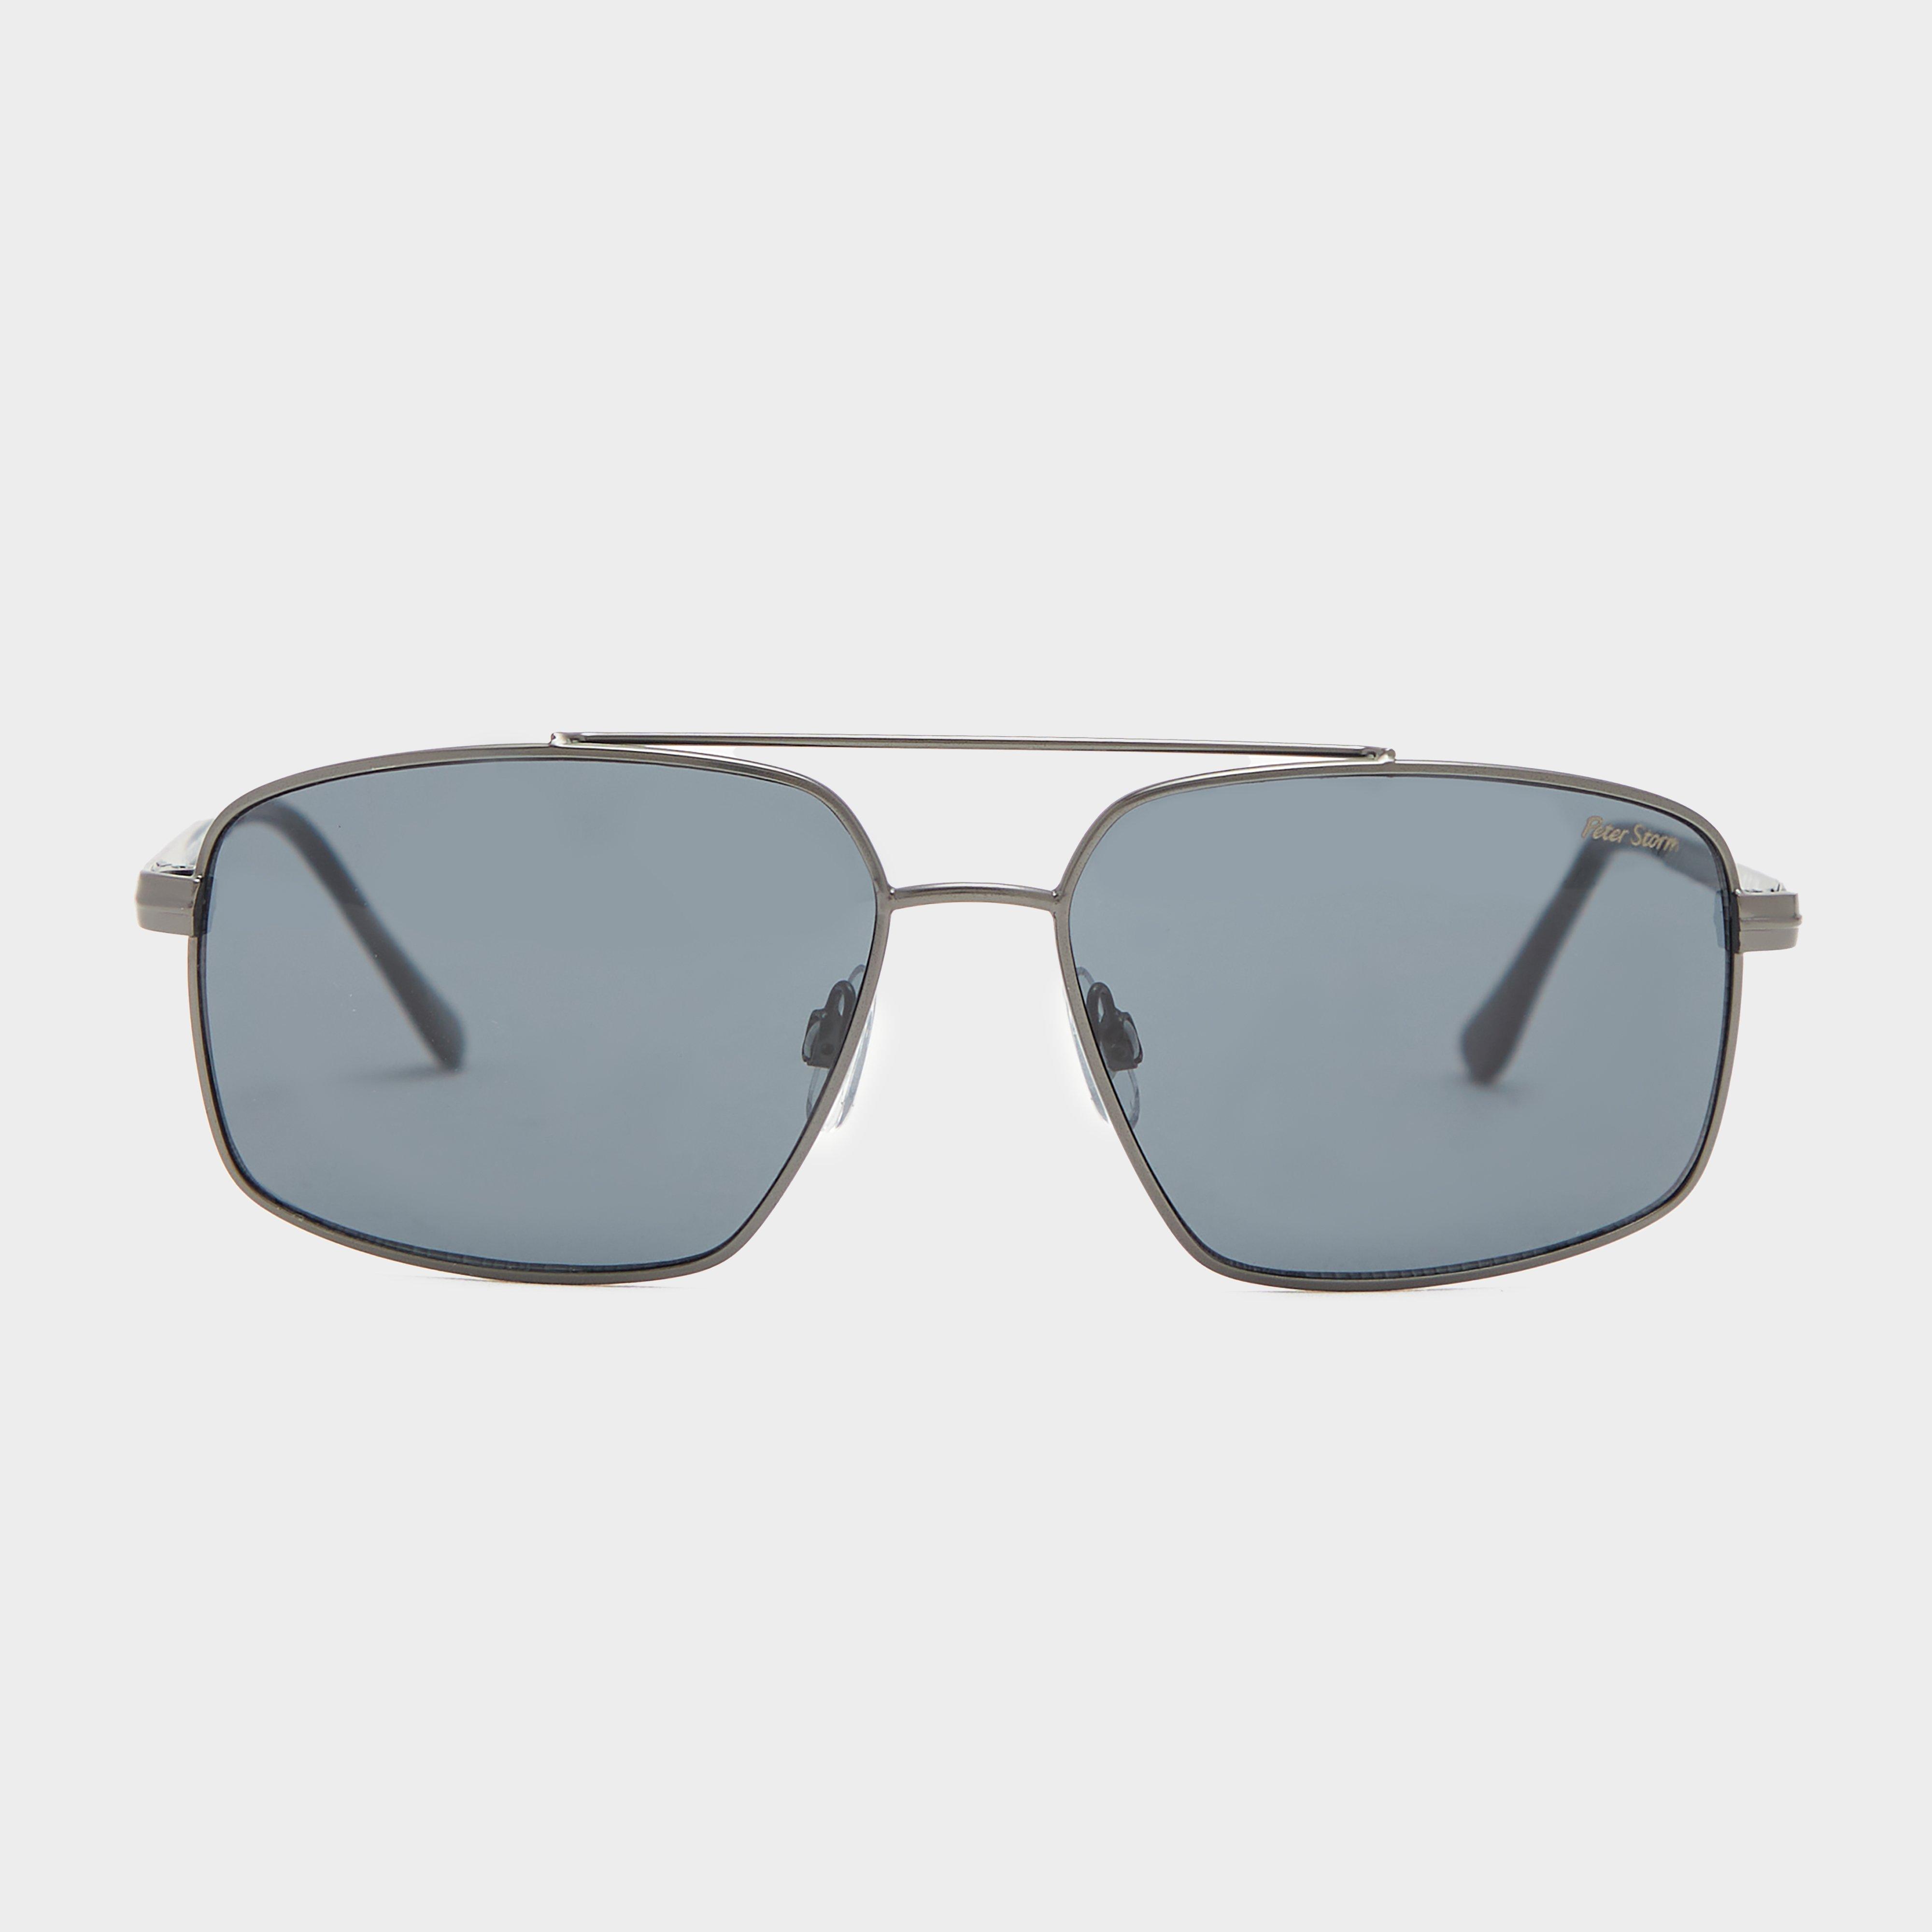 Image of Peter Storm Southend Sunglasses - Dgy, DGY